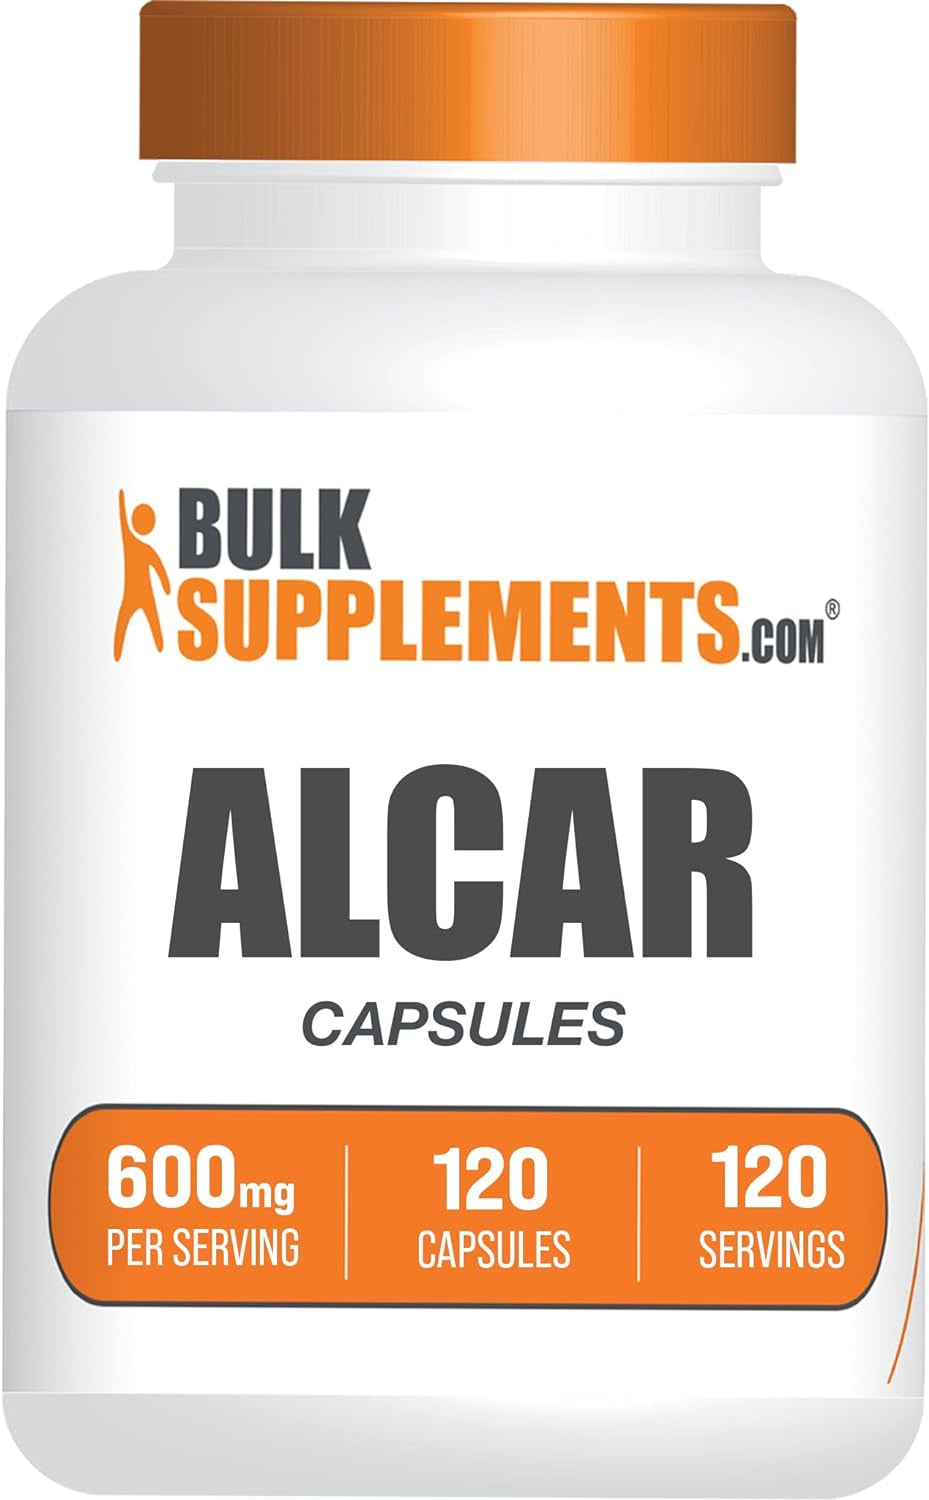 BULKSUPPLEMENTS.COM Acetyl L-Carnitine Capsules - ALCAR Hcl, Carnitine Supplement, ALCAR 600Mg - Acetyl-L-Carnitine, ALCAR Capsules - Gluten Free, 1 Capsule per Serving, 120 Capsules